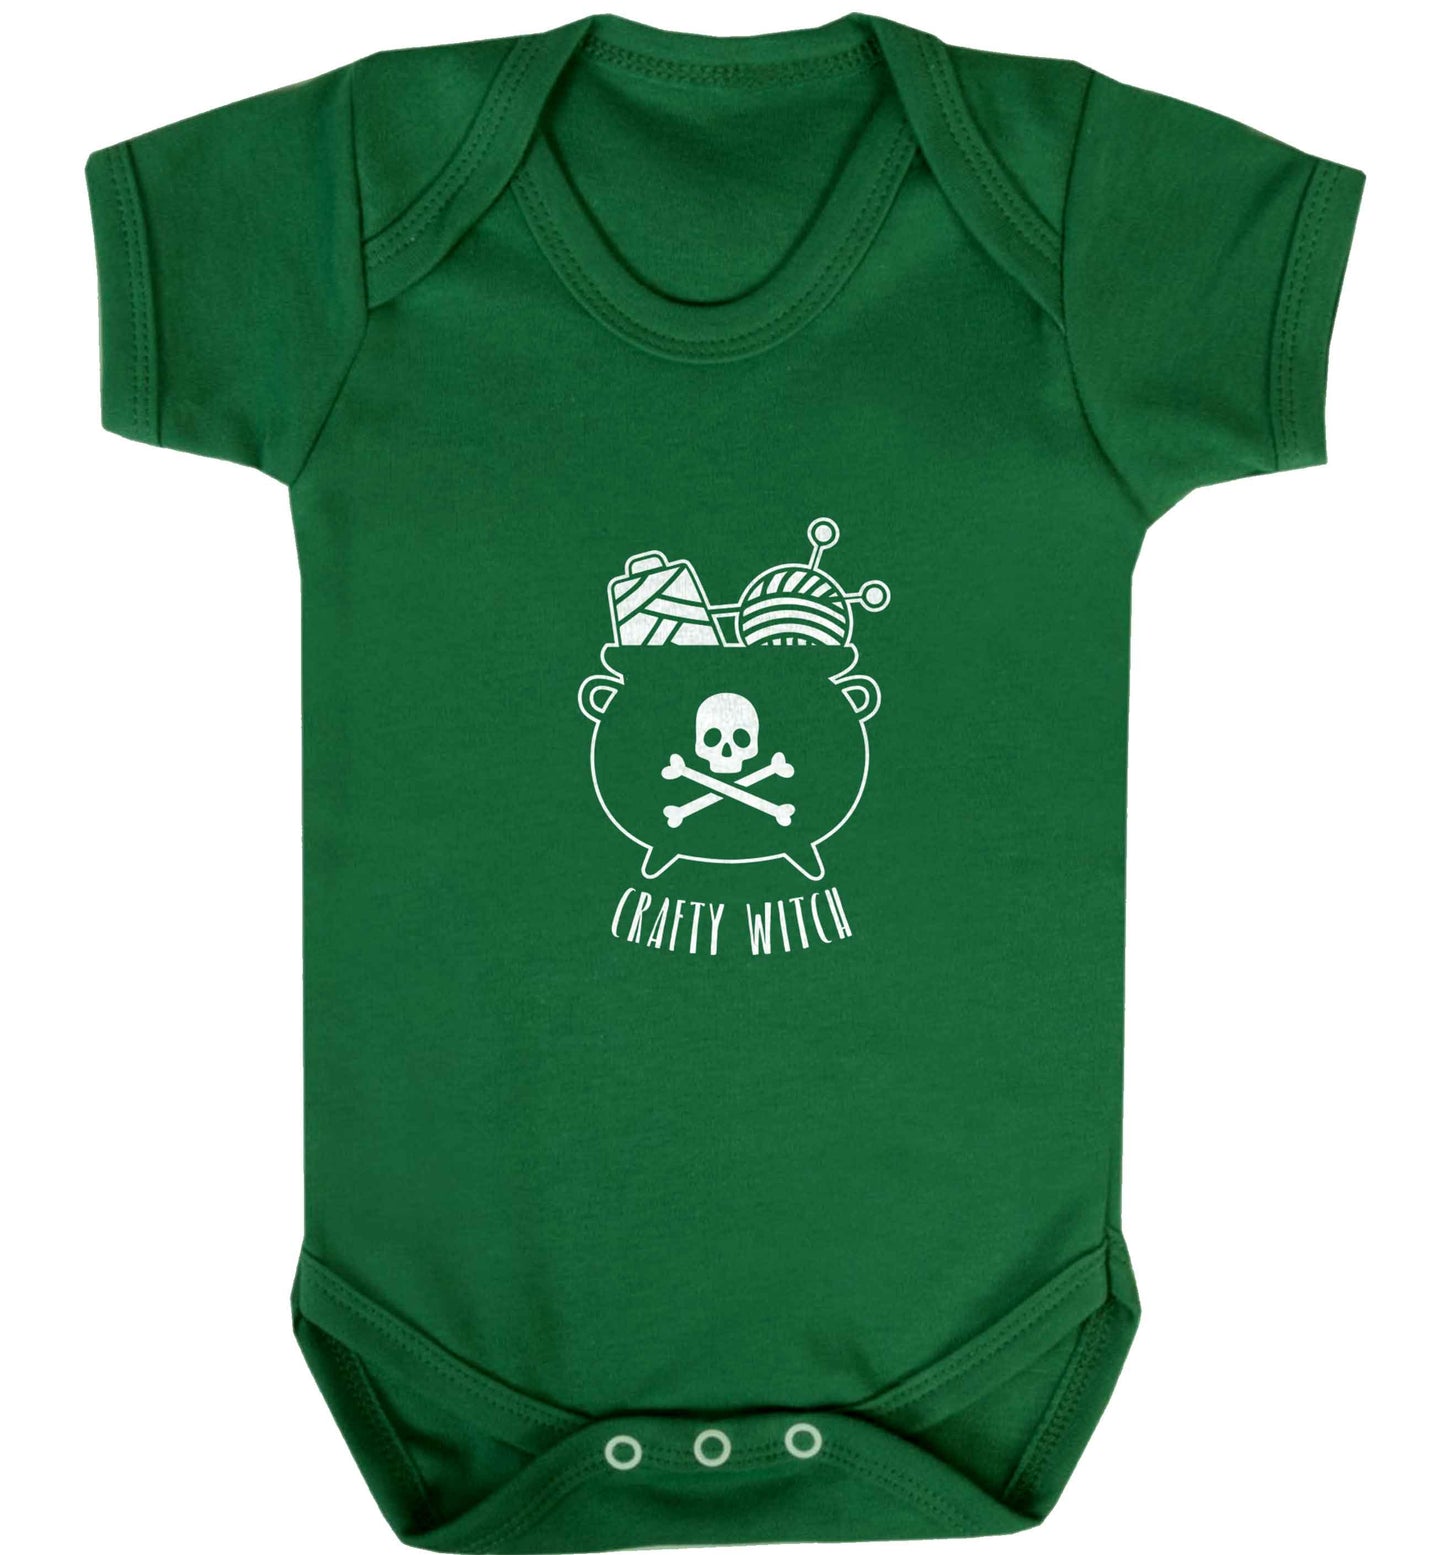 Crafty witch baby vest green 18-24 months